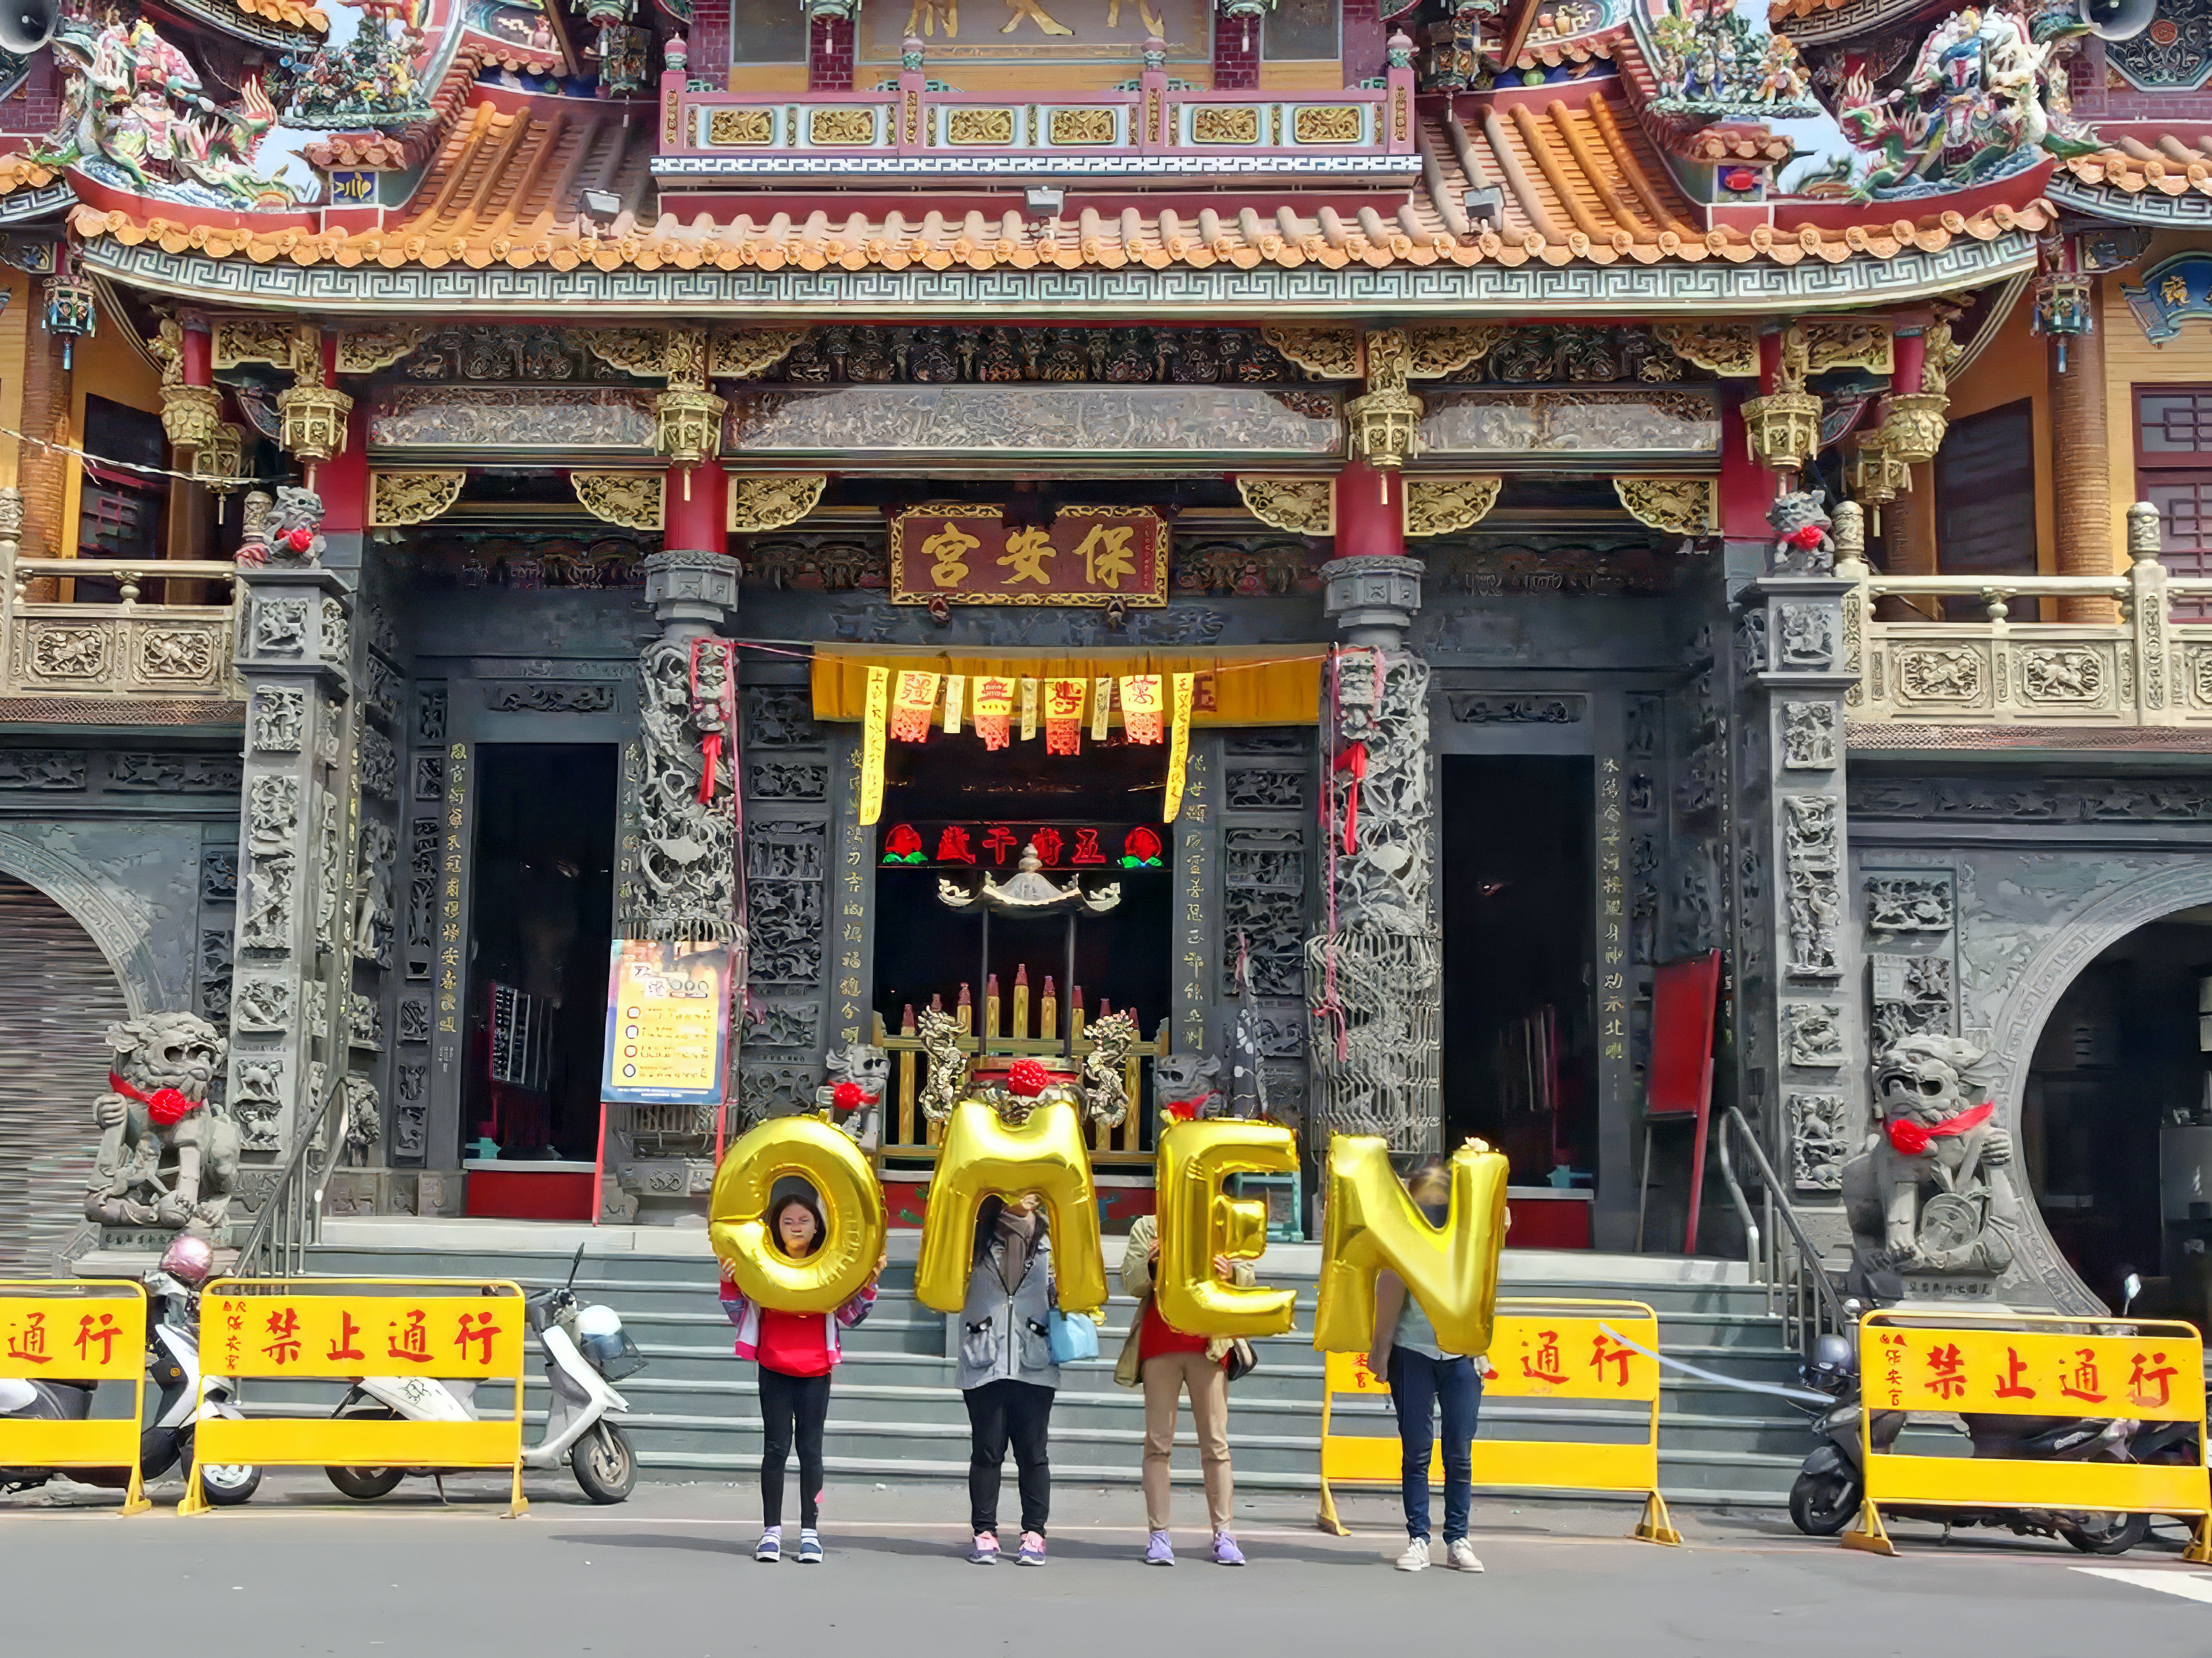 Taiwan, Tainan, South Plant Baoan Temple, Omen, Silence Was Golden, gold balloons